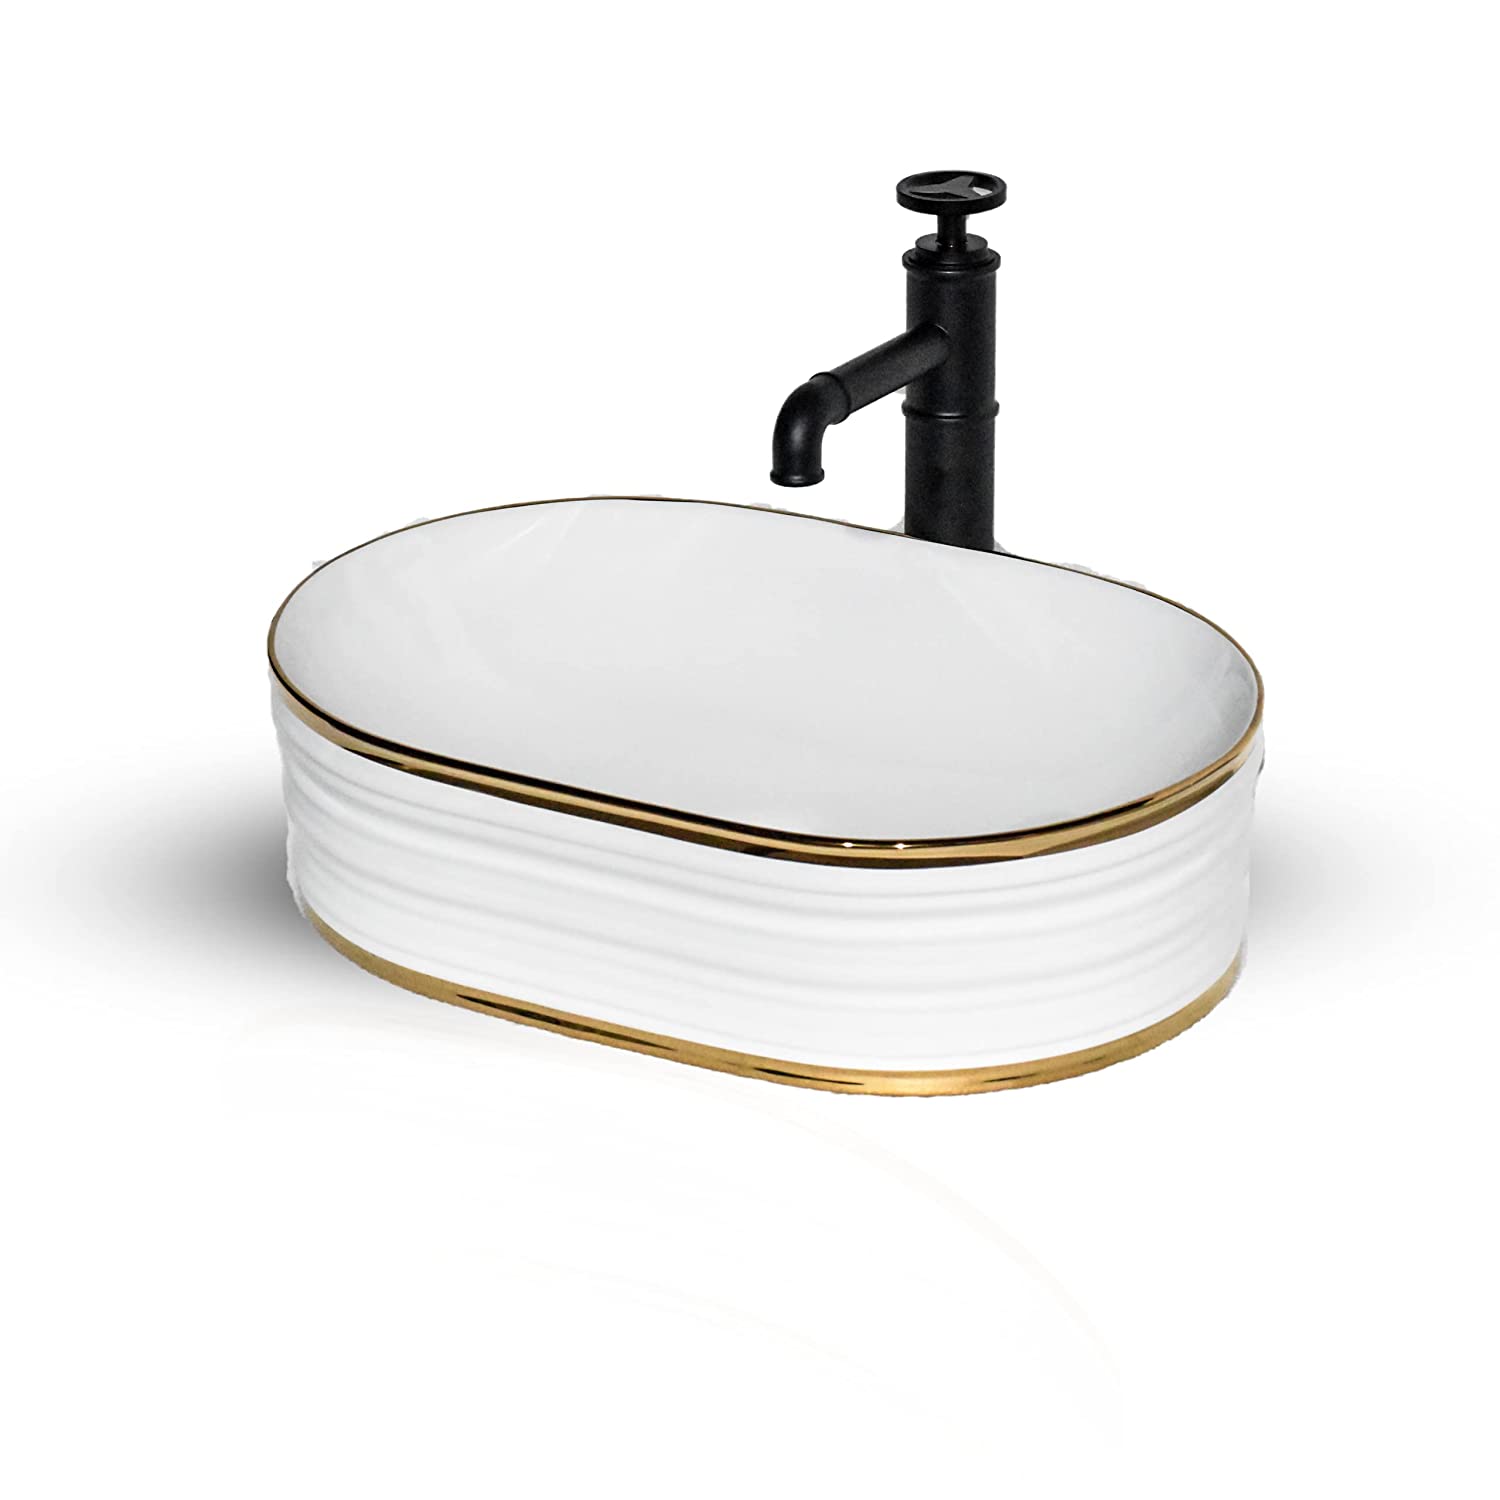 inart wash basin designs in white gold color